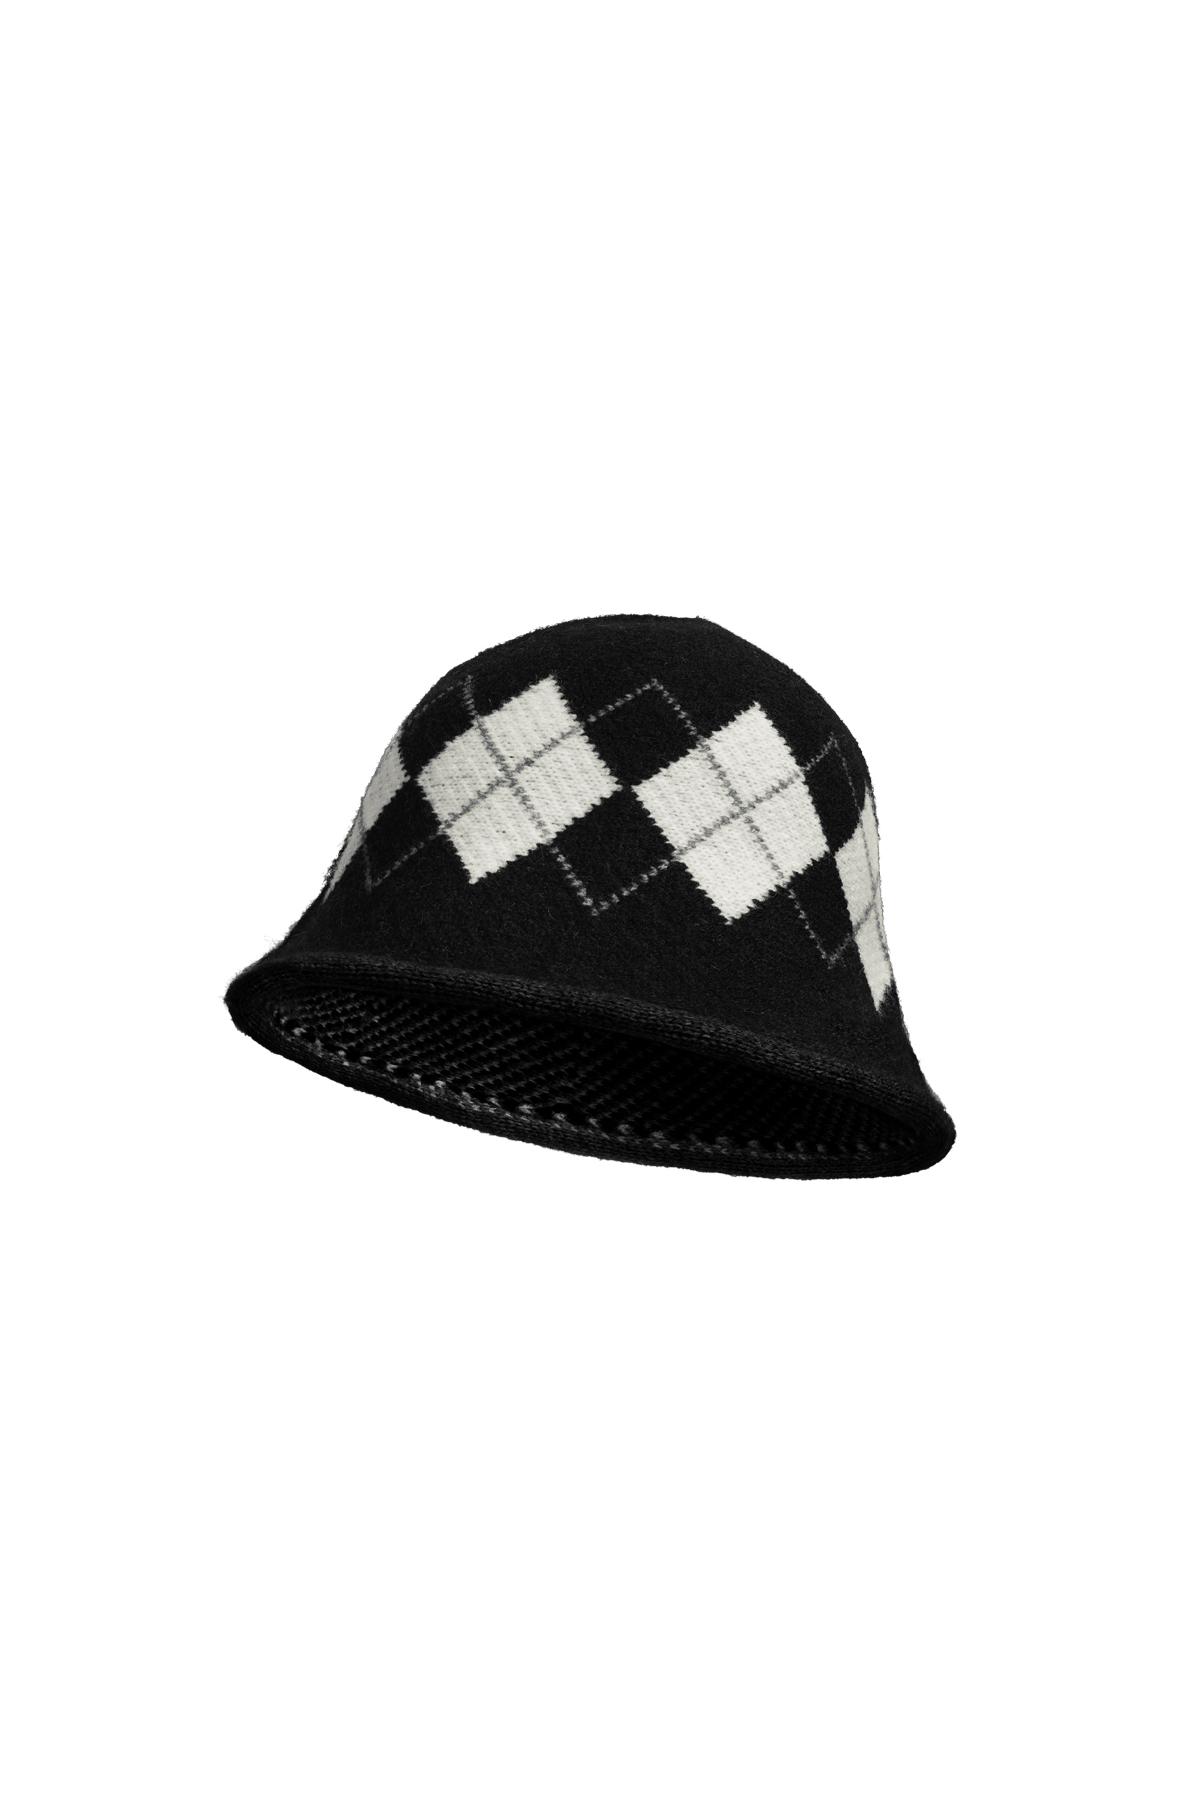 Bucket hat checkered Black & White Acrylic h5 